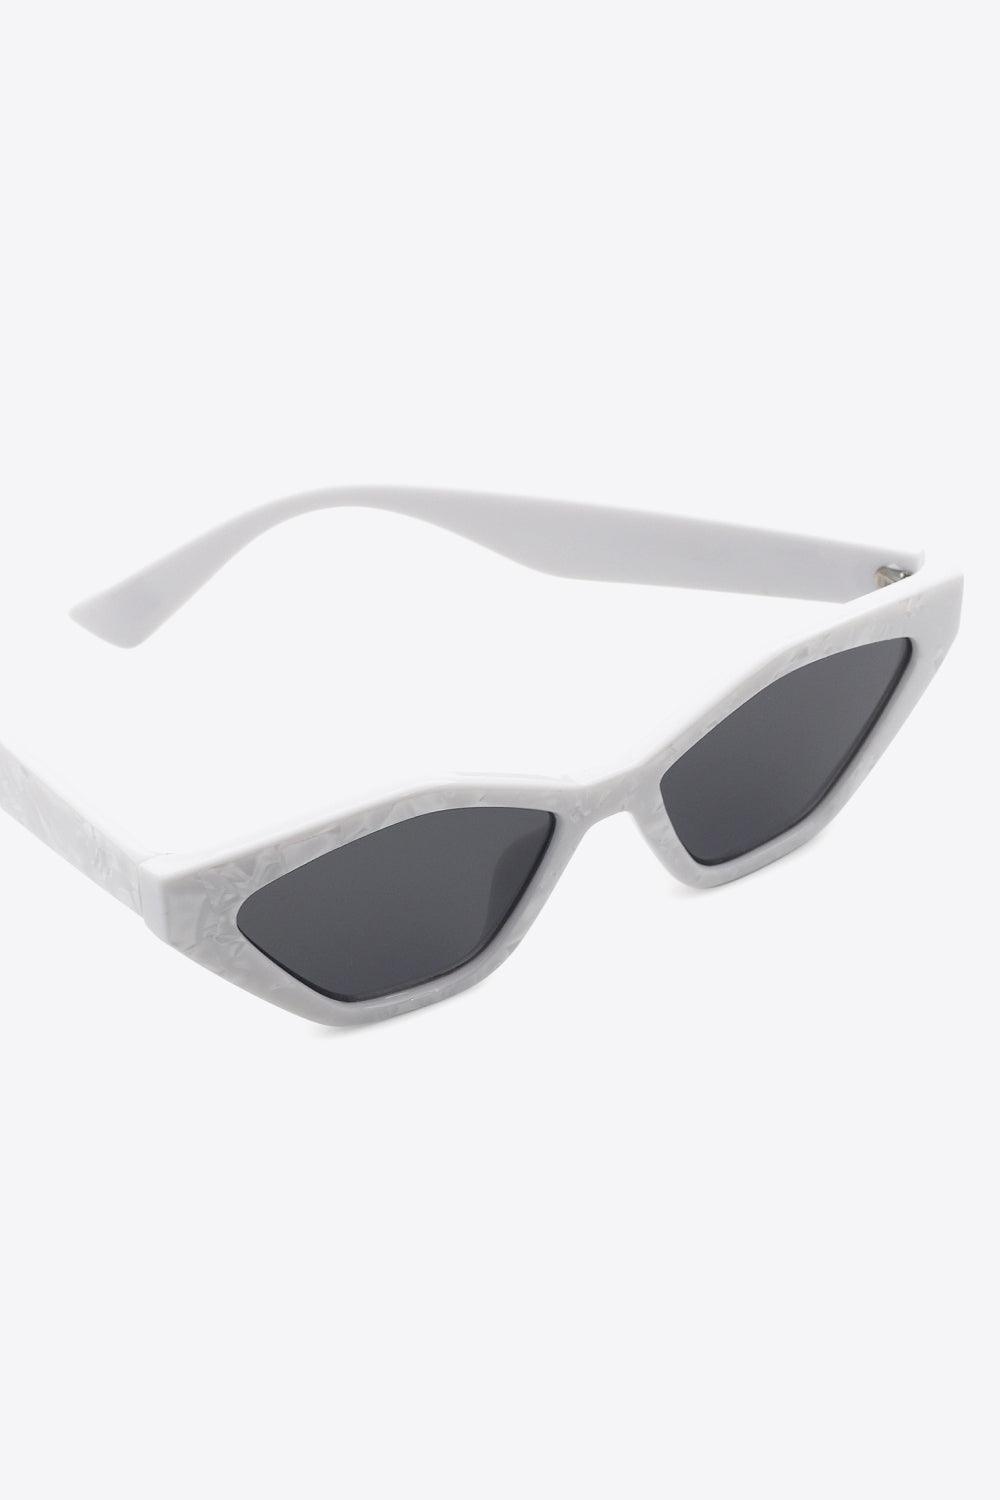 Exceptional Cat Eye Polycarbonate Sunglasses - MXSTUDIO.COM